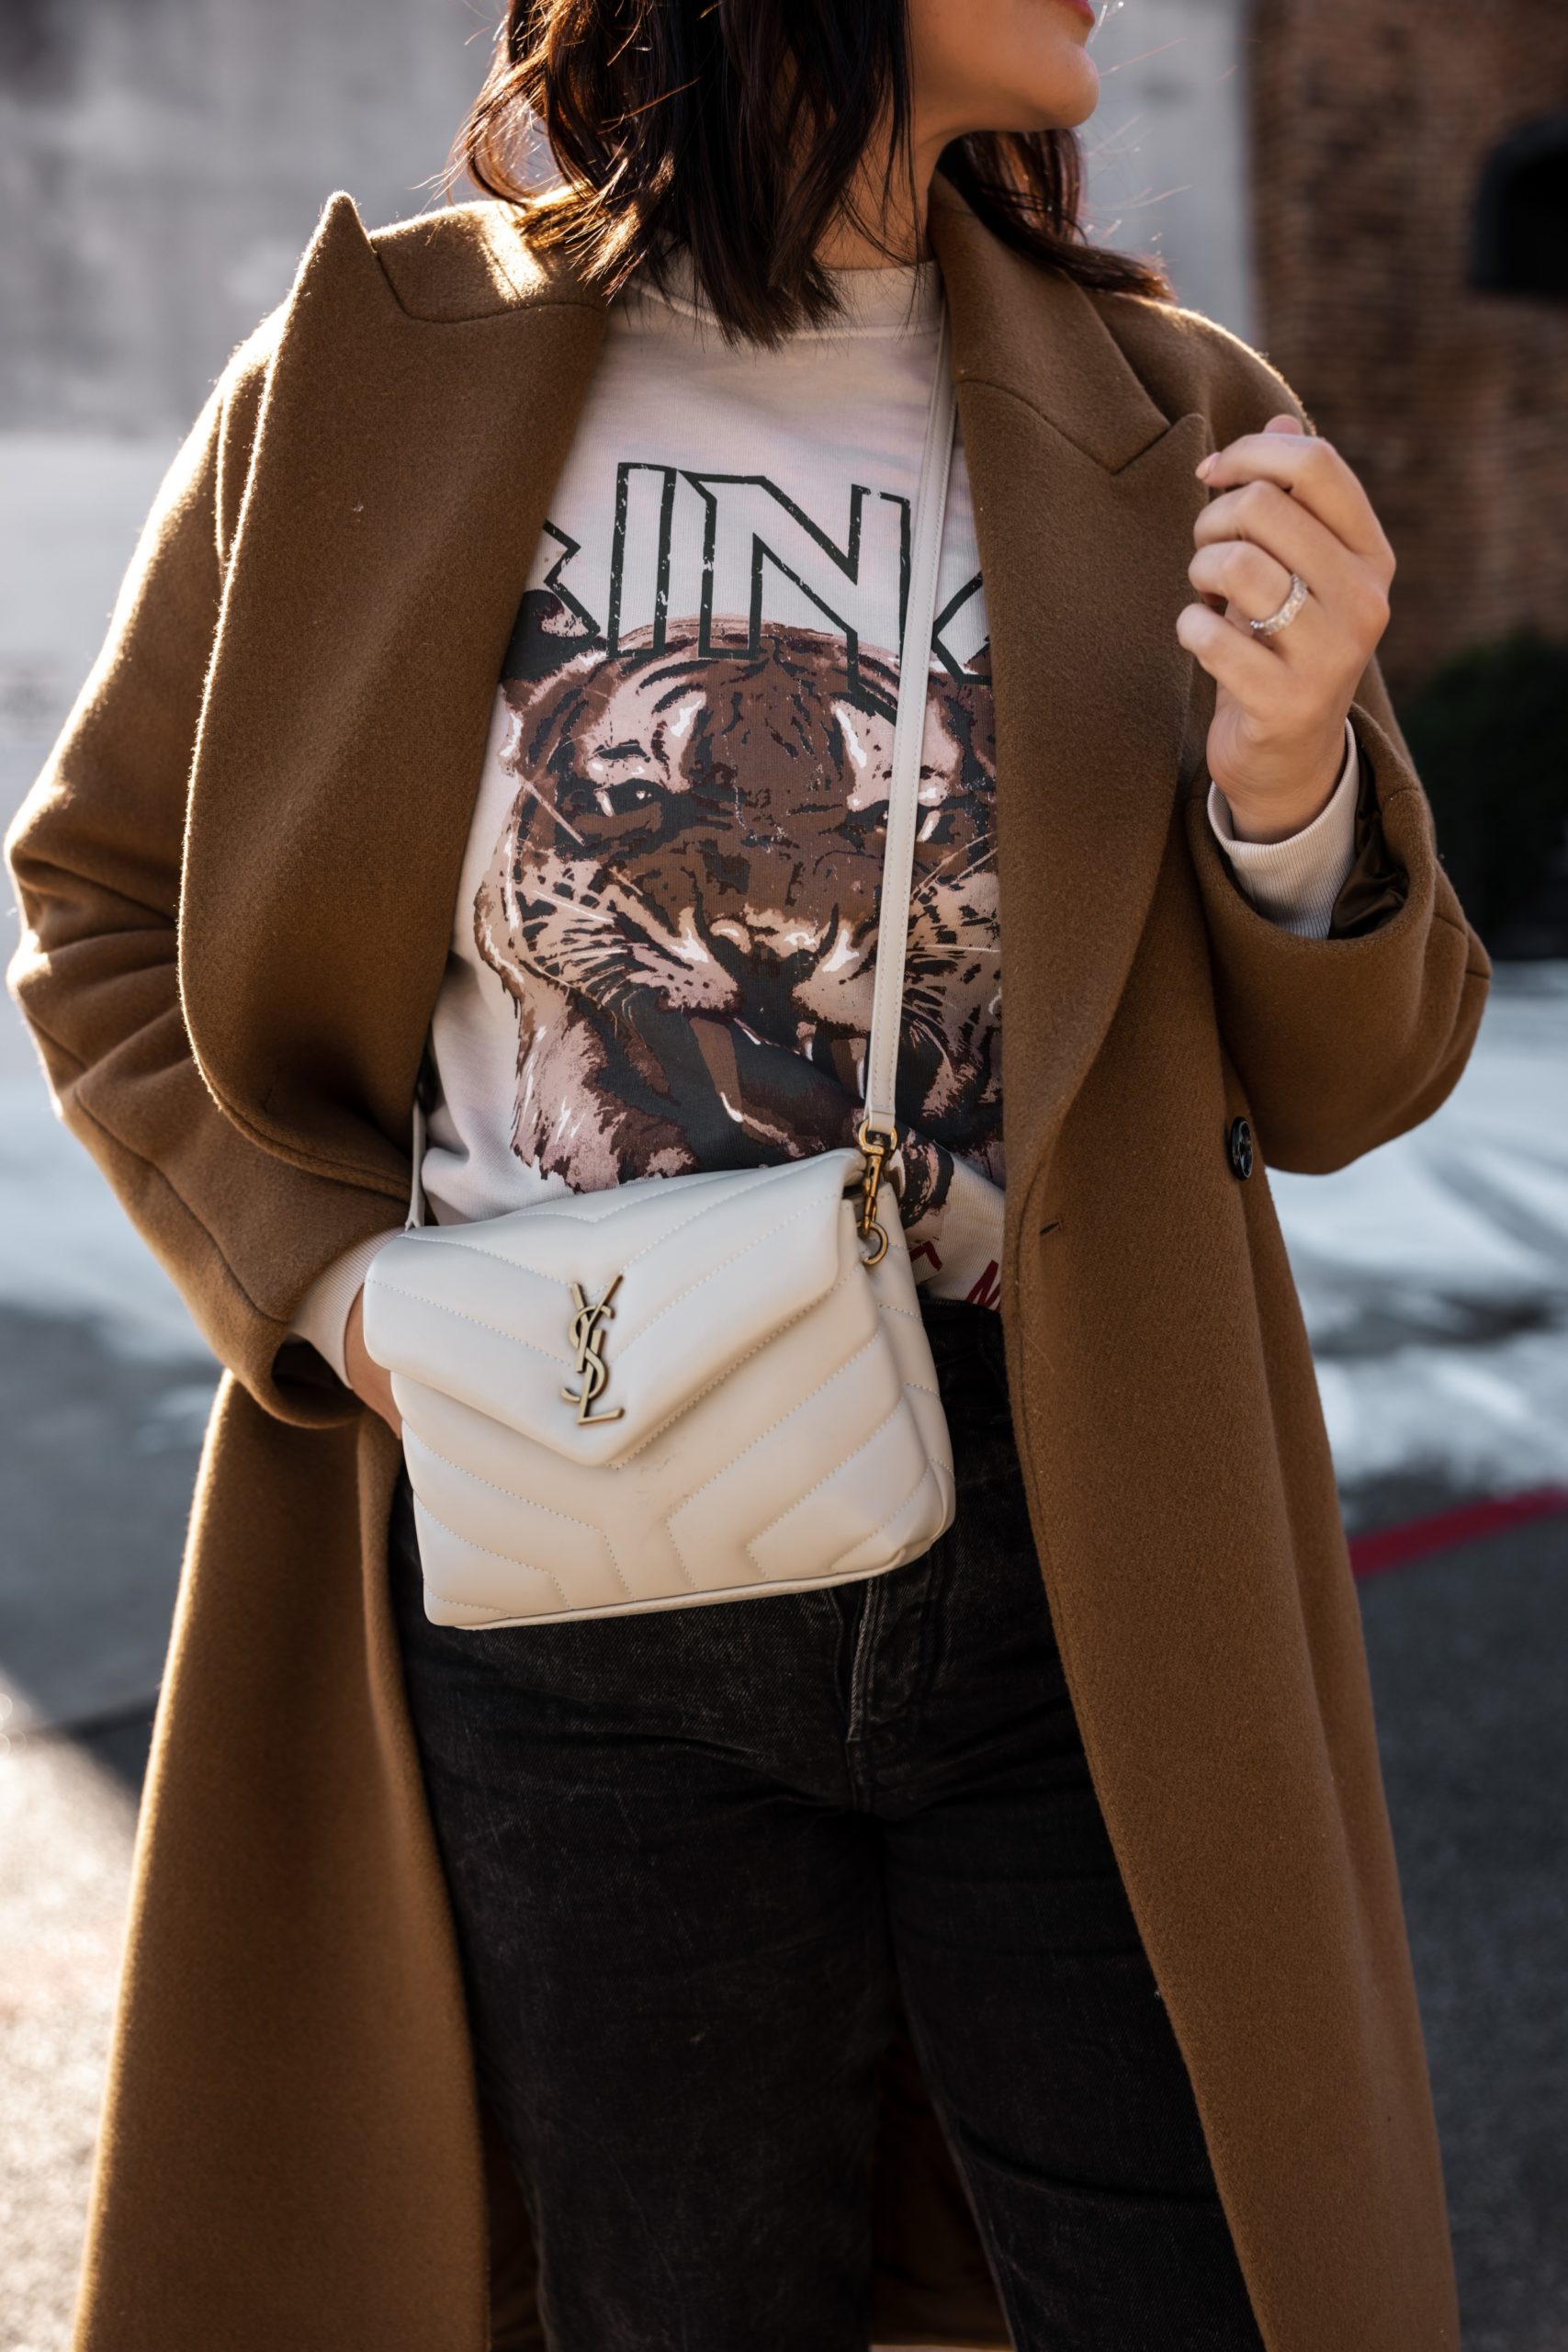 Anine Bing Tiger Sweatshirt